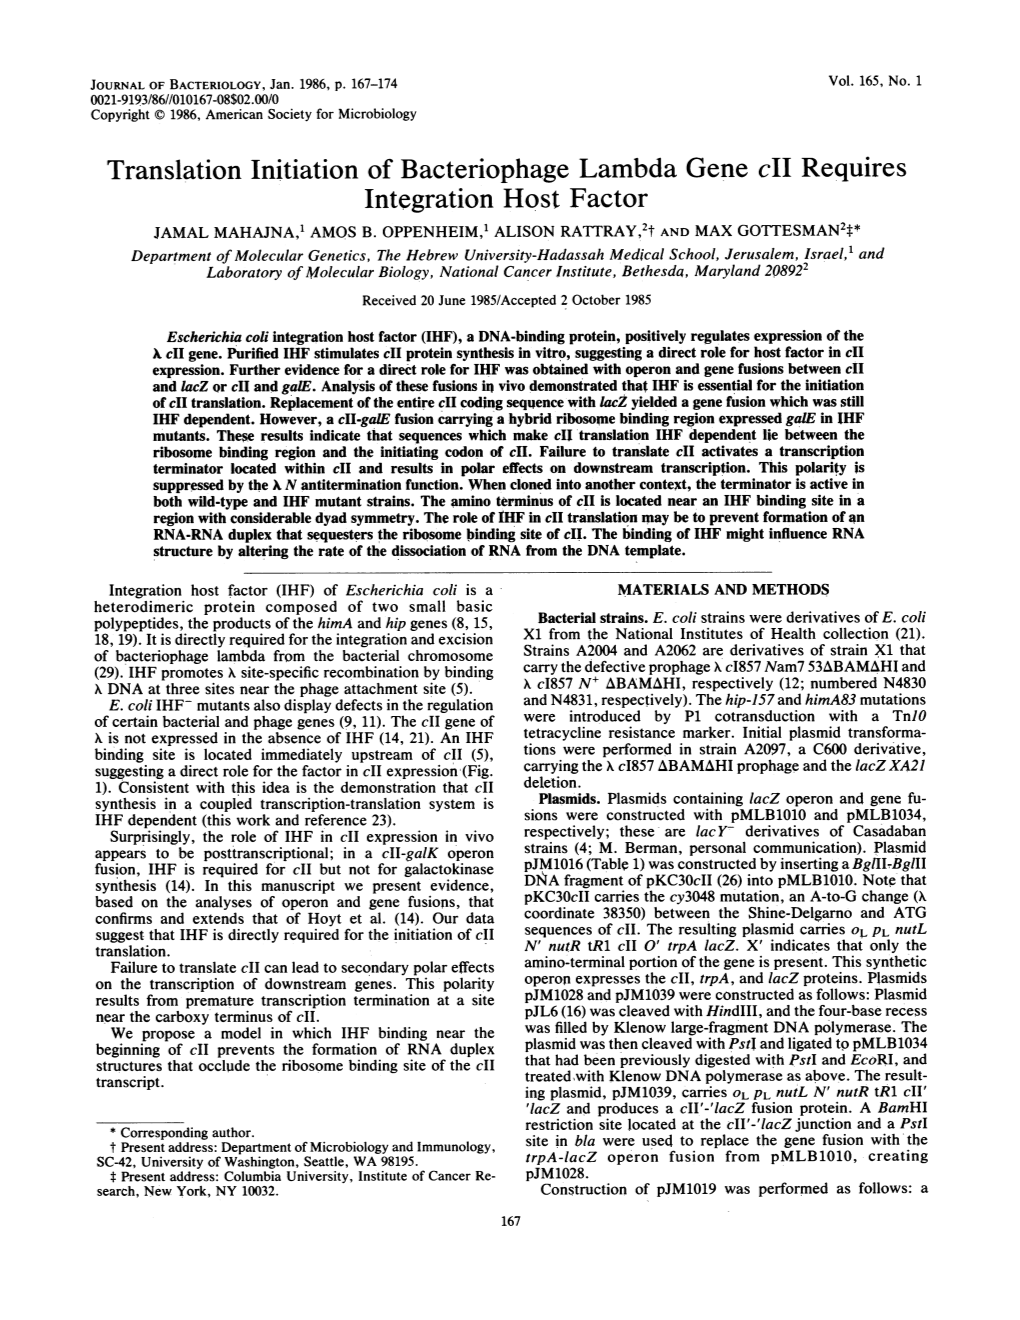 Translation Initiation of Bacteriophage Lambda Gene Cli Requires Integration Host Factor JAMAL MAHAJNA,1 AMOS B